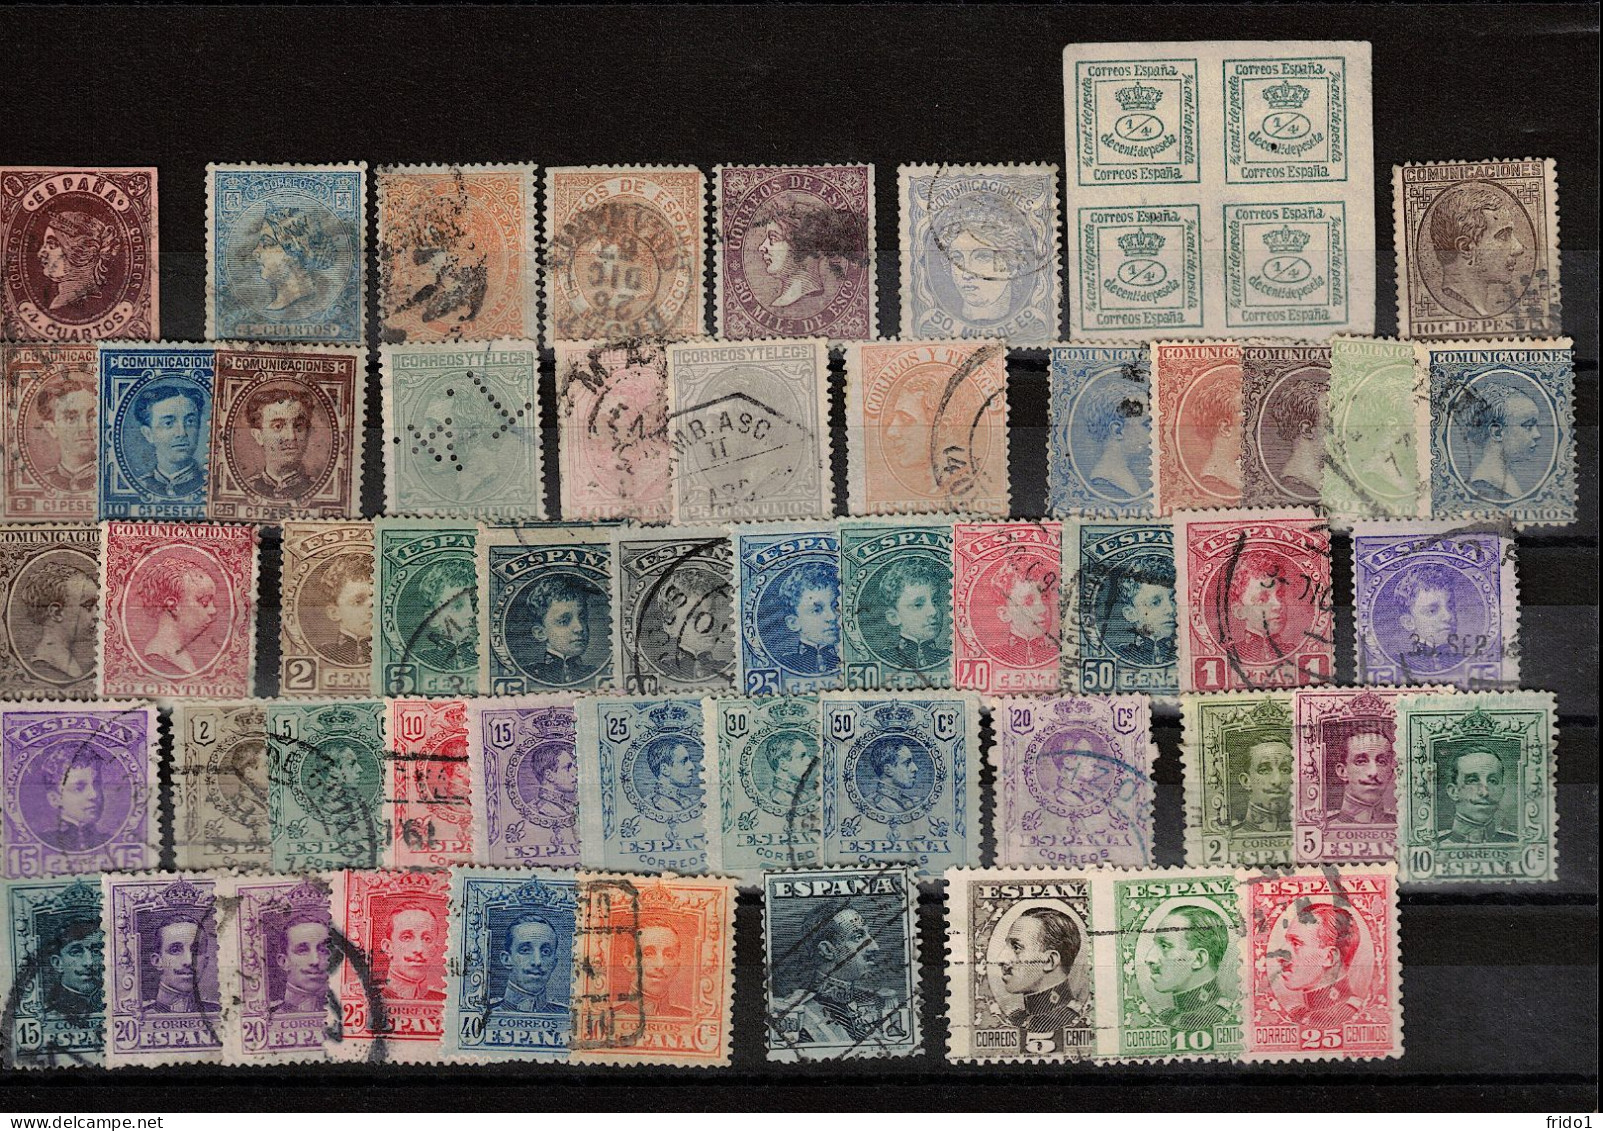 Spain Selection Of Stamps Fine Used - Sammlungen